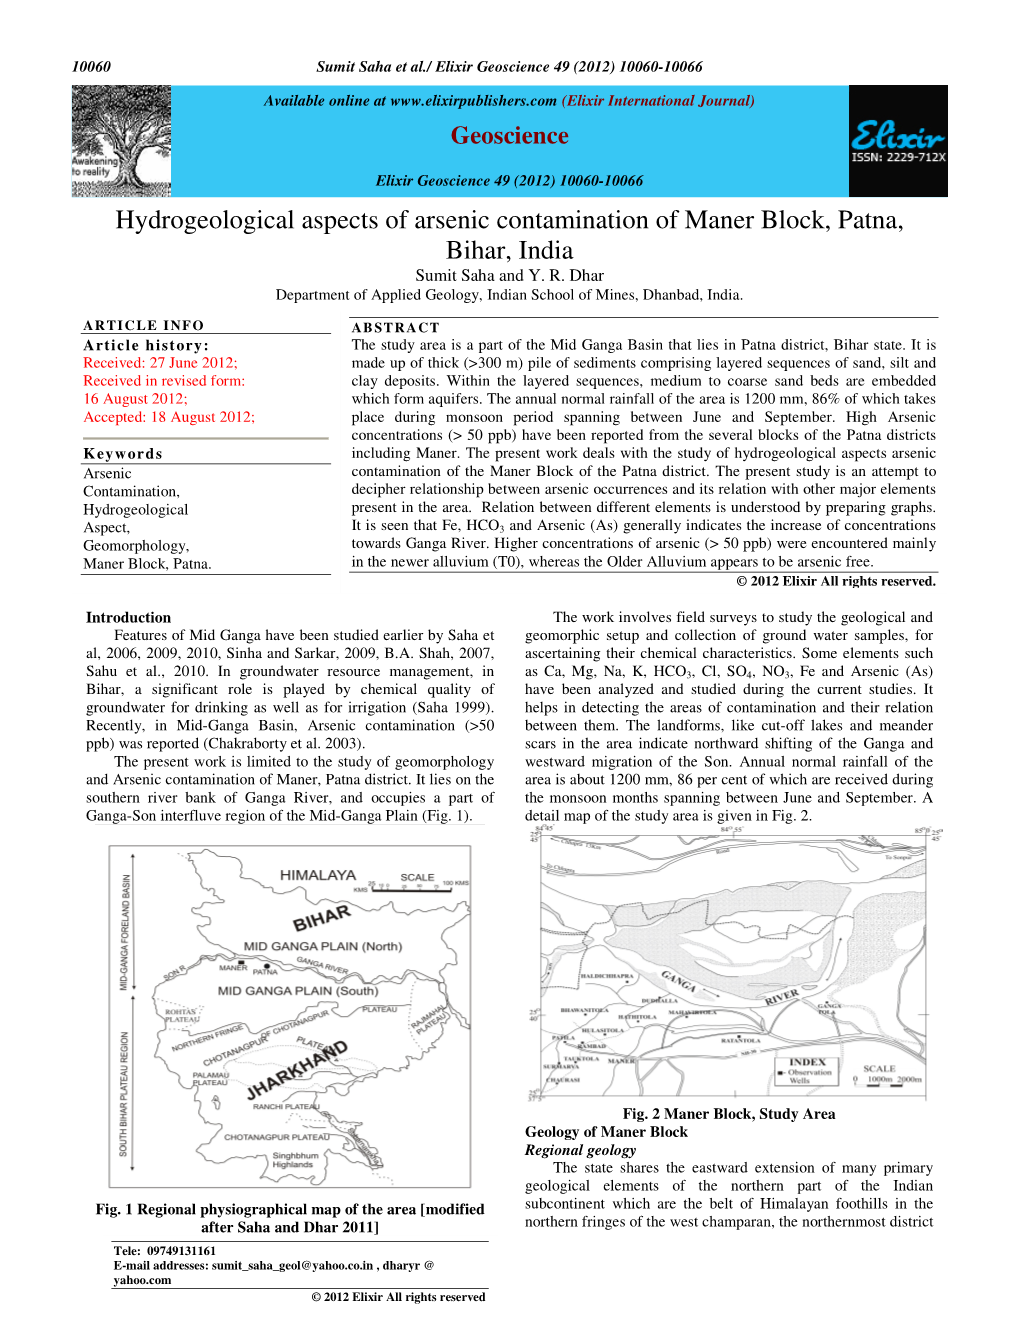 Hydrogeological Aspects of Arsenic Contamination of Maner Block, Patna, Bihar, India Sumit Saha and Y